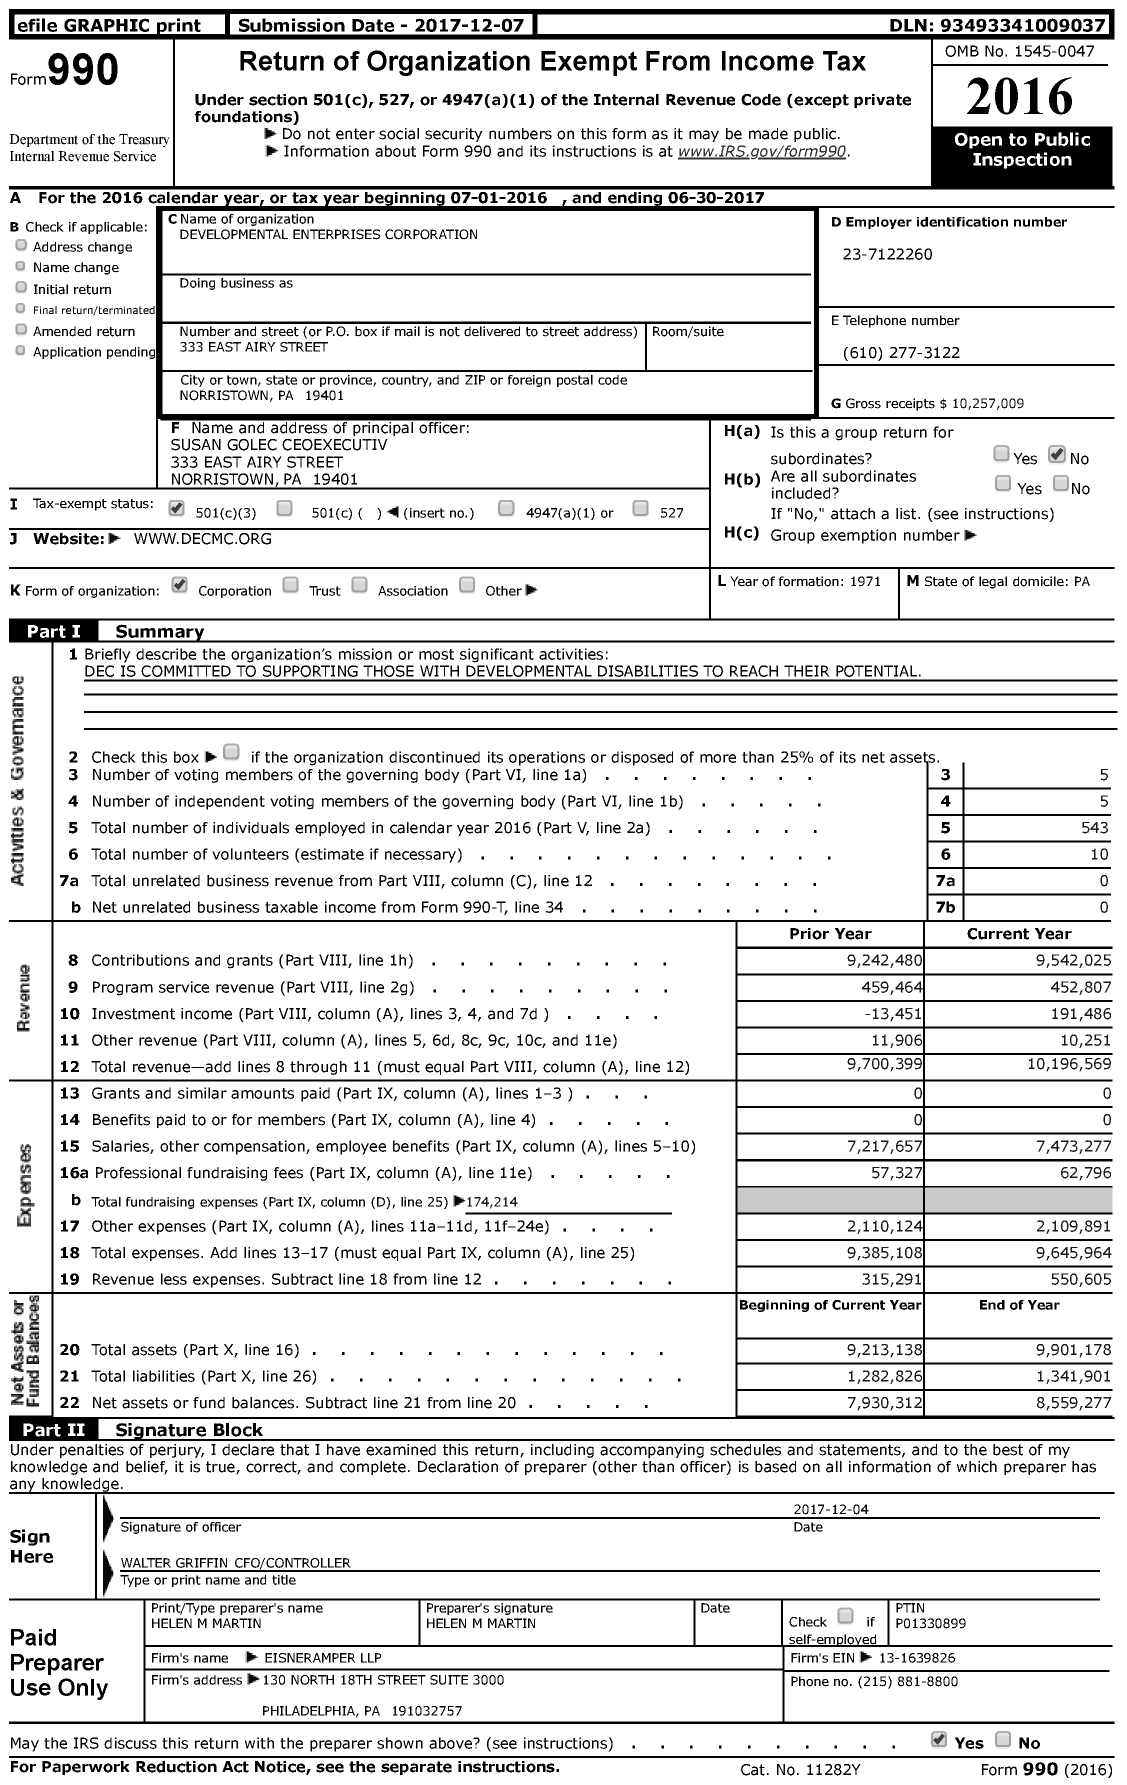 Image of first page of 2016 Form 990 for DEVELOPMENTAL Enterprises Corporation (DEC)